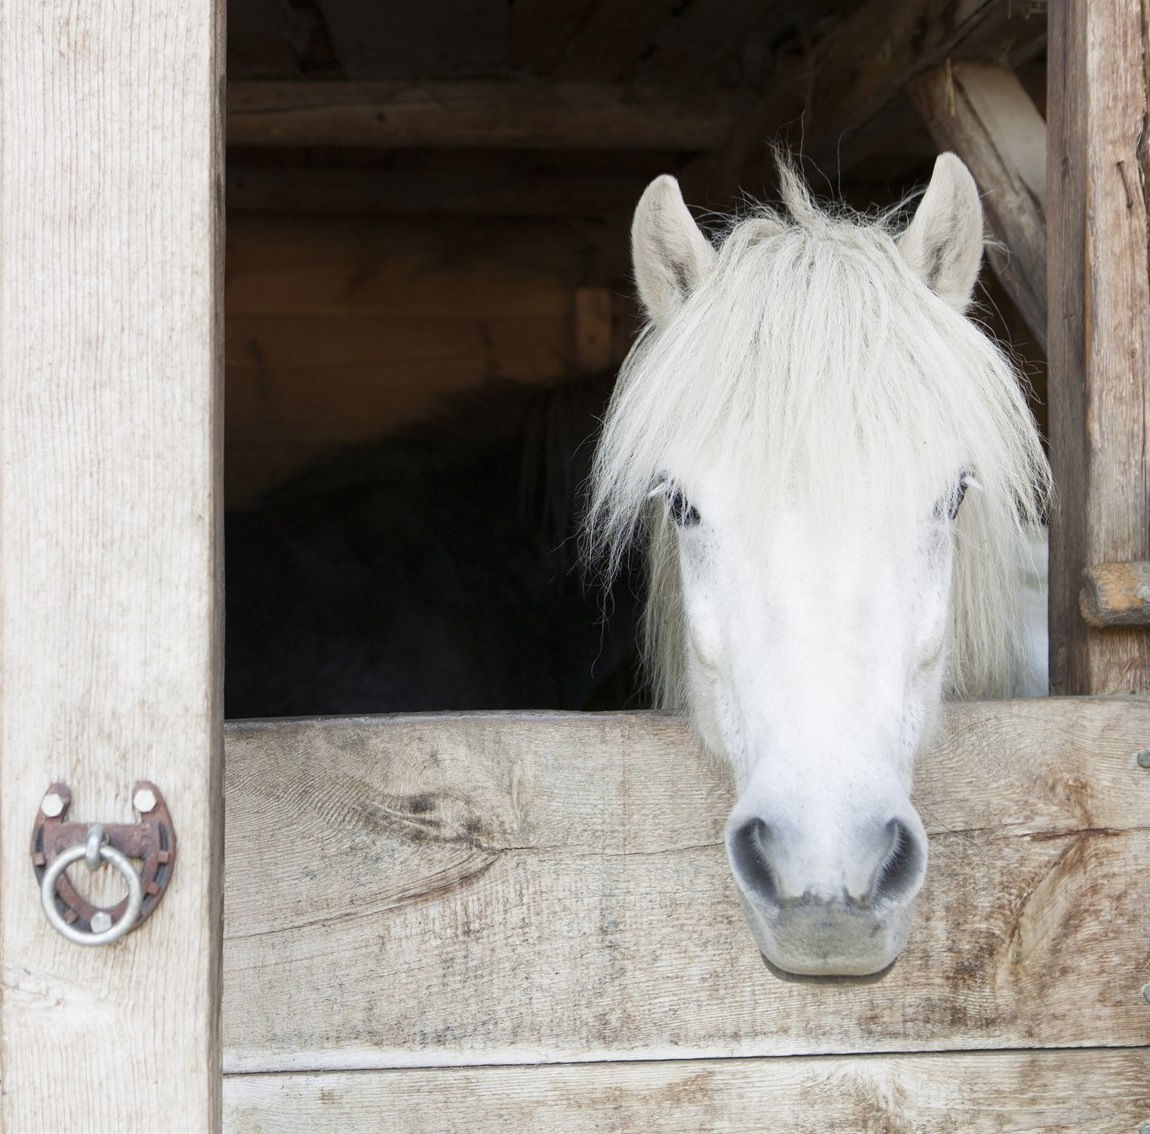 White horse looking over stall door